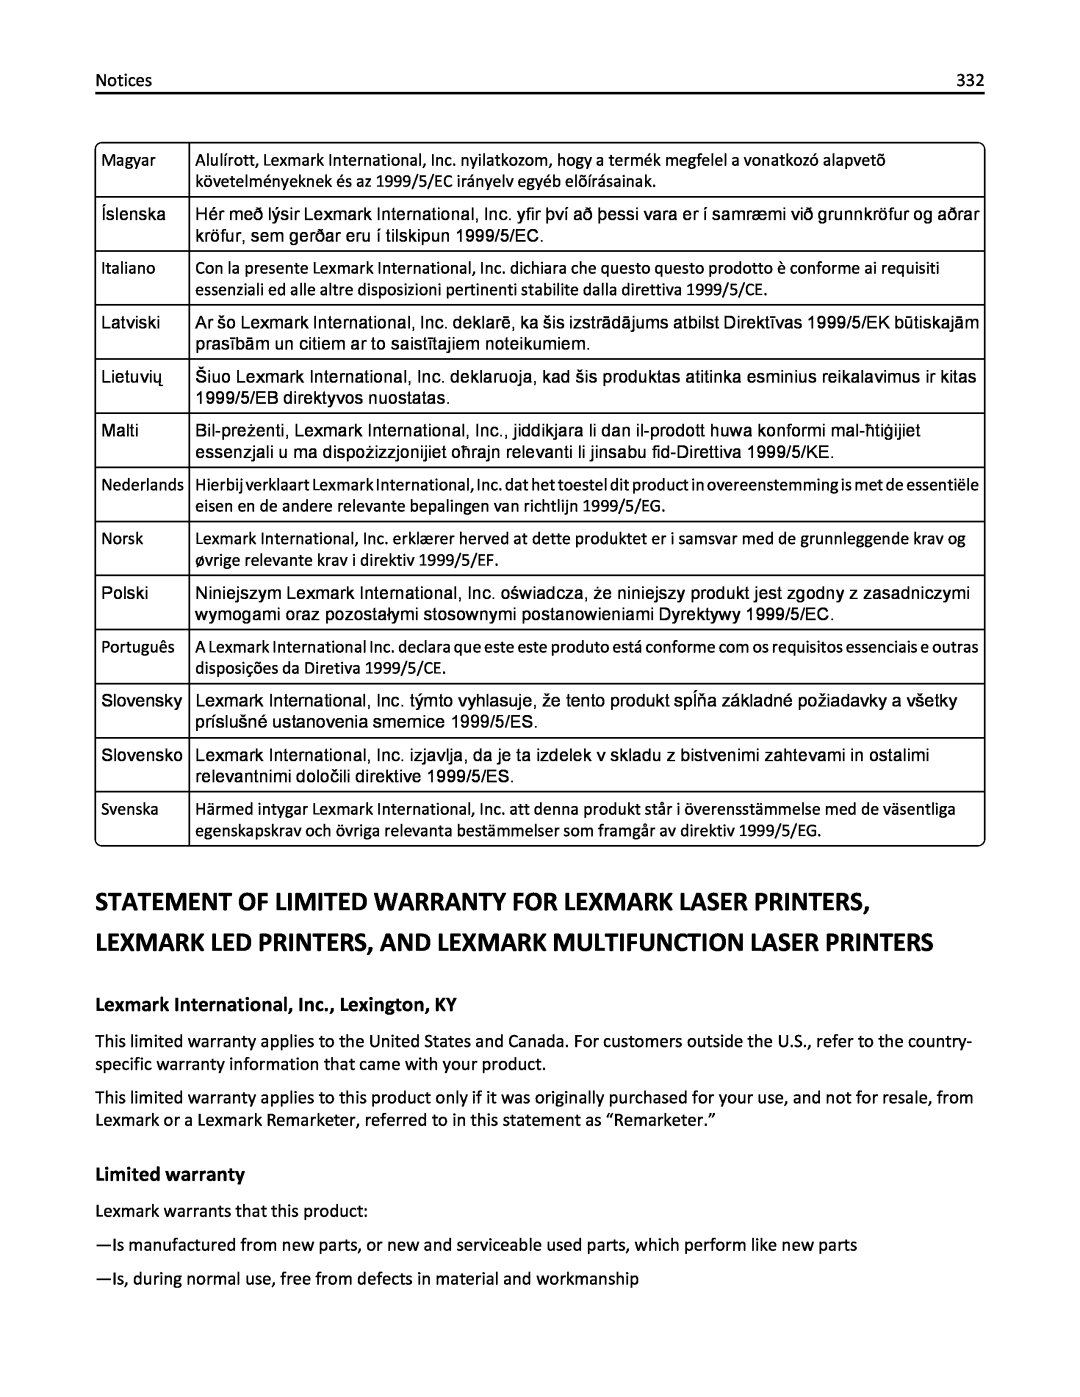 Lexmark 436 manual Statement Of Limited Warranty For Lexmark Laser Printers, Lexmark International, Inc., Lexington, KY 